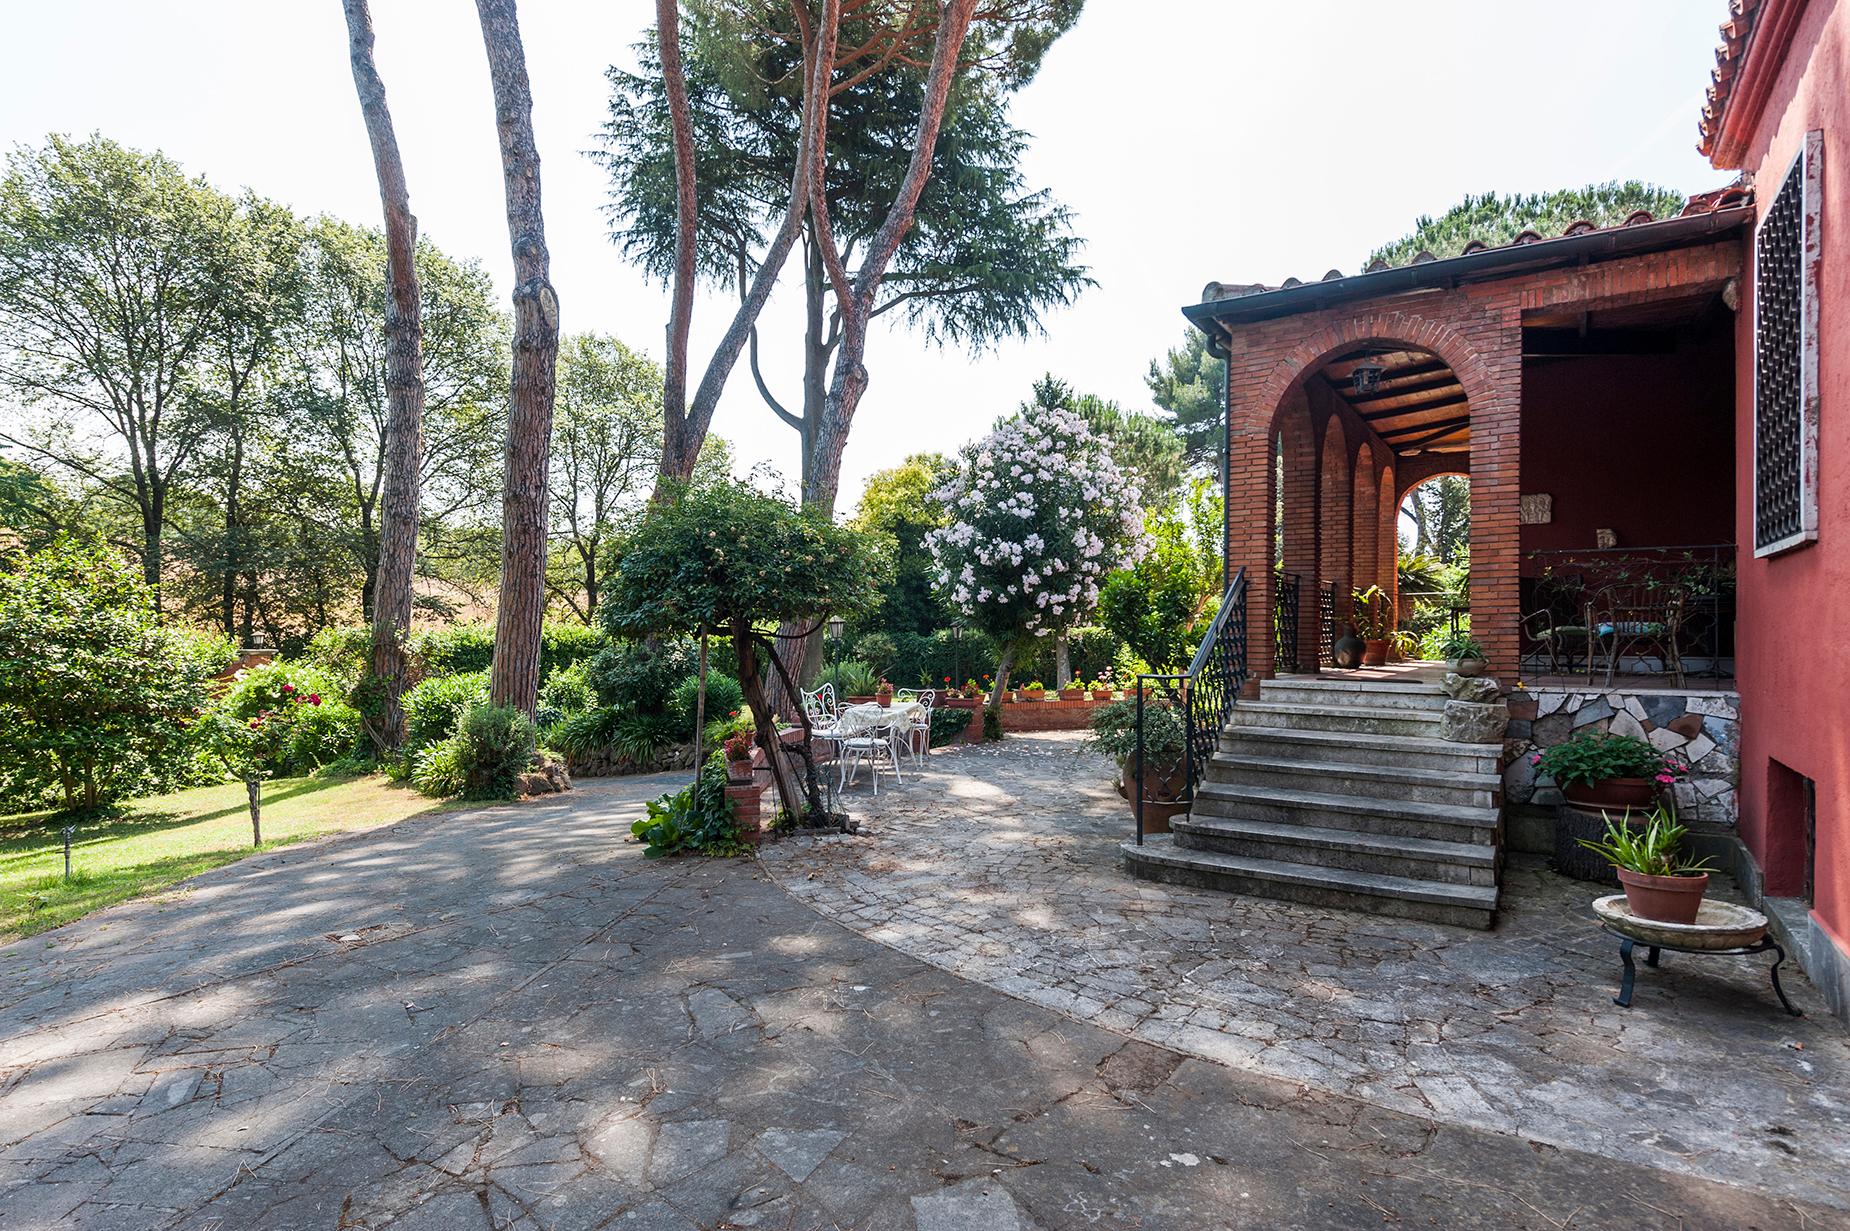                                                     Beautiful villa with large garden near Via Appia Antica                                                     - 21